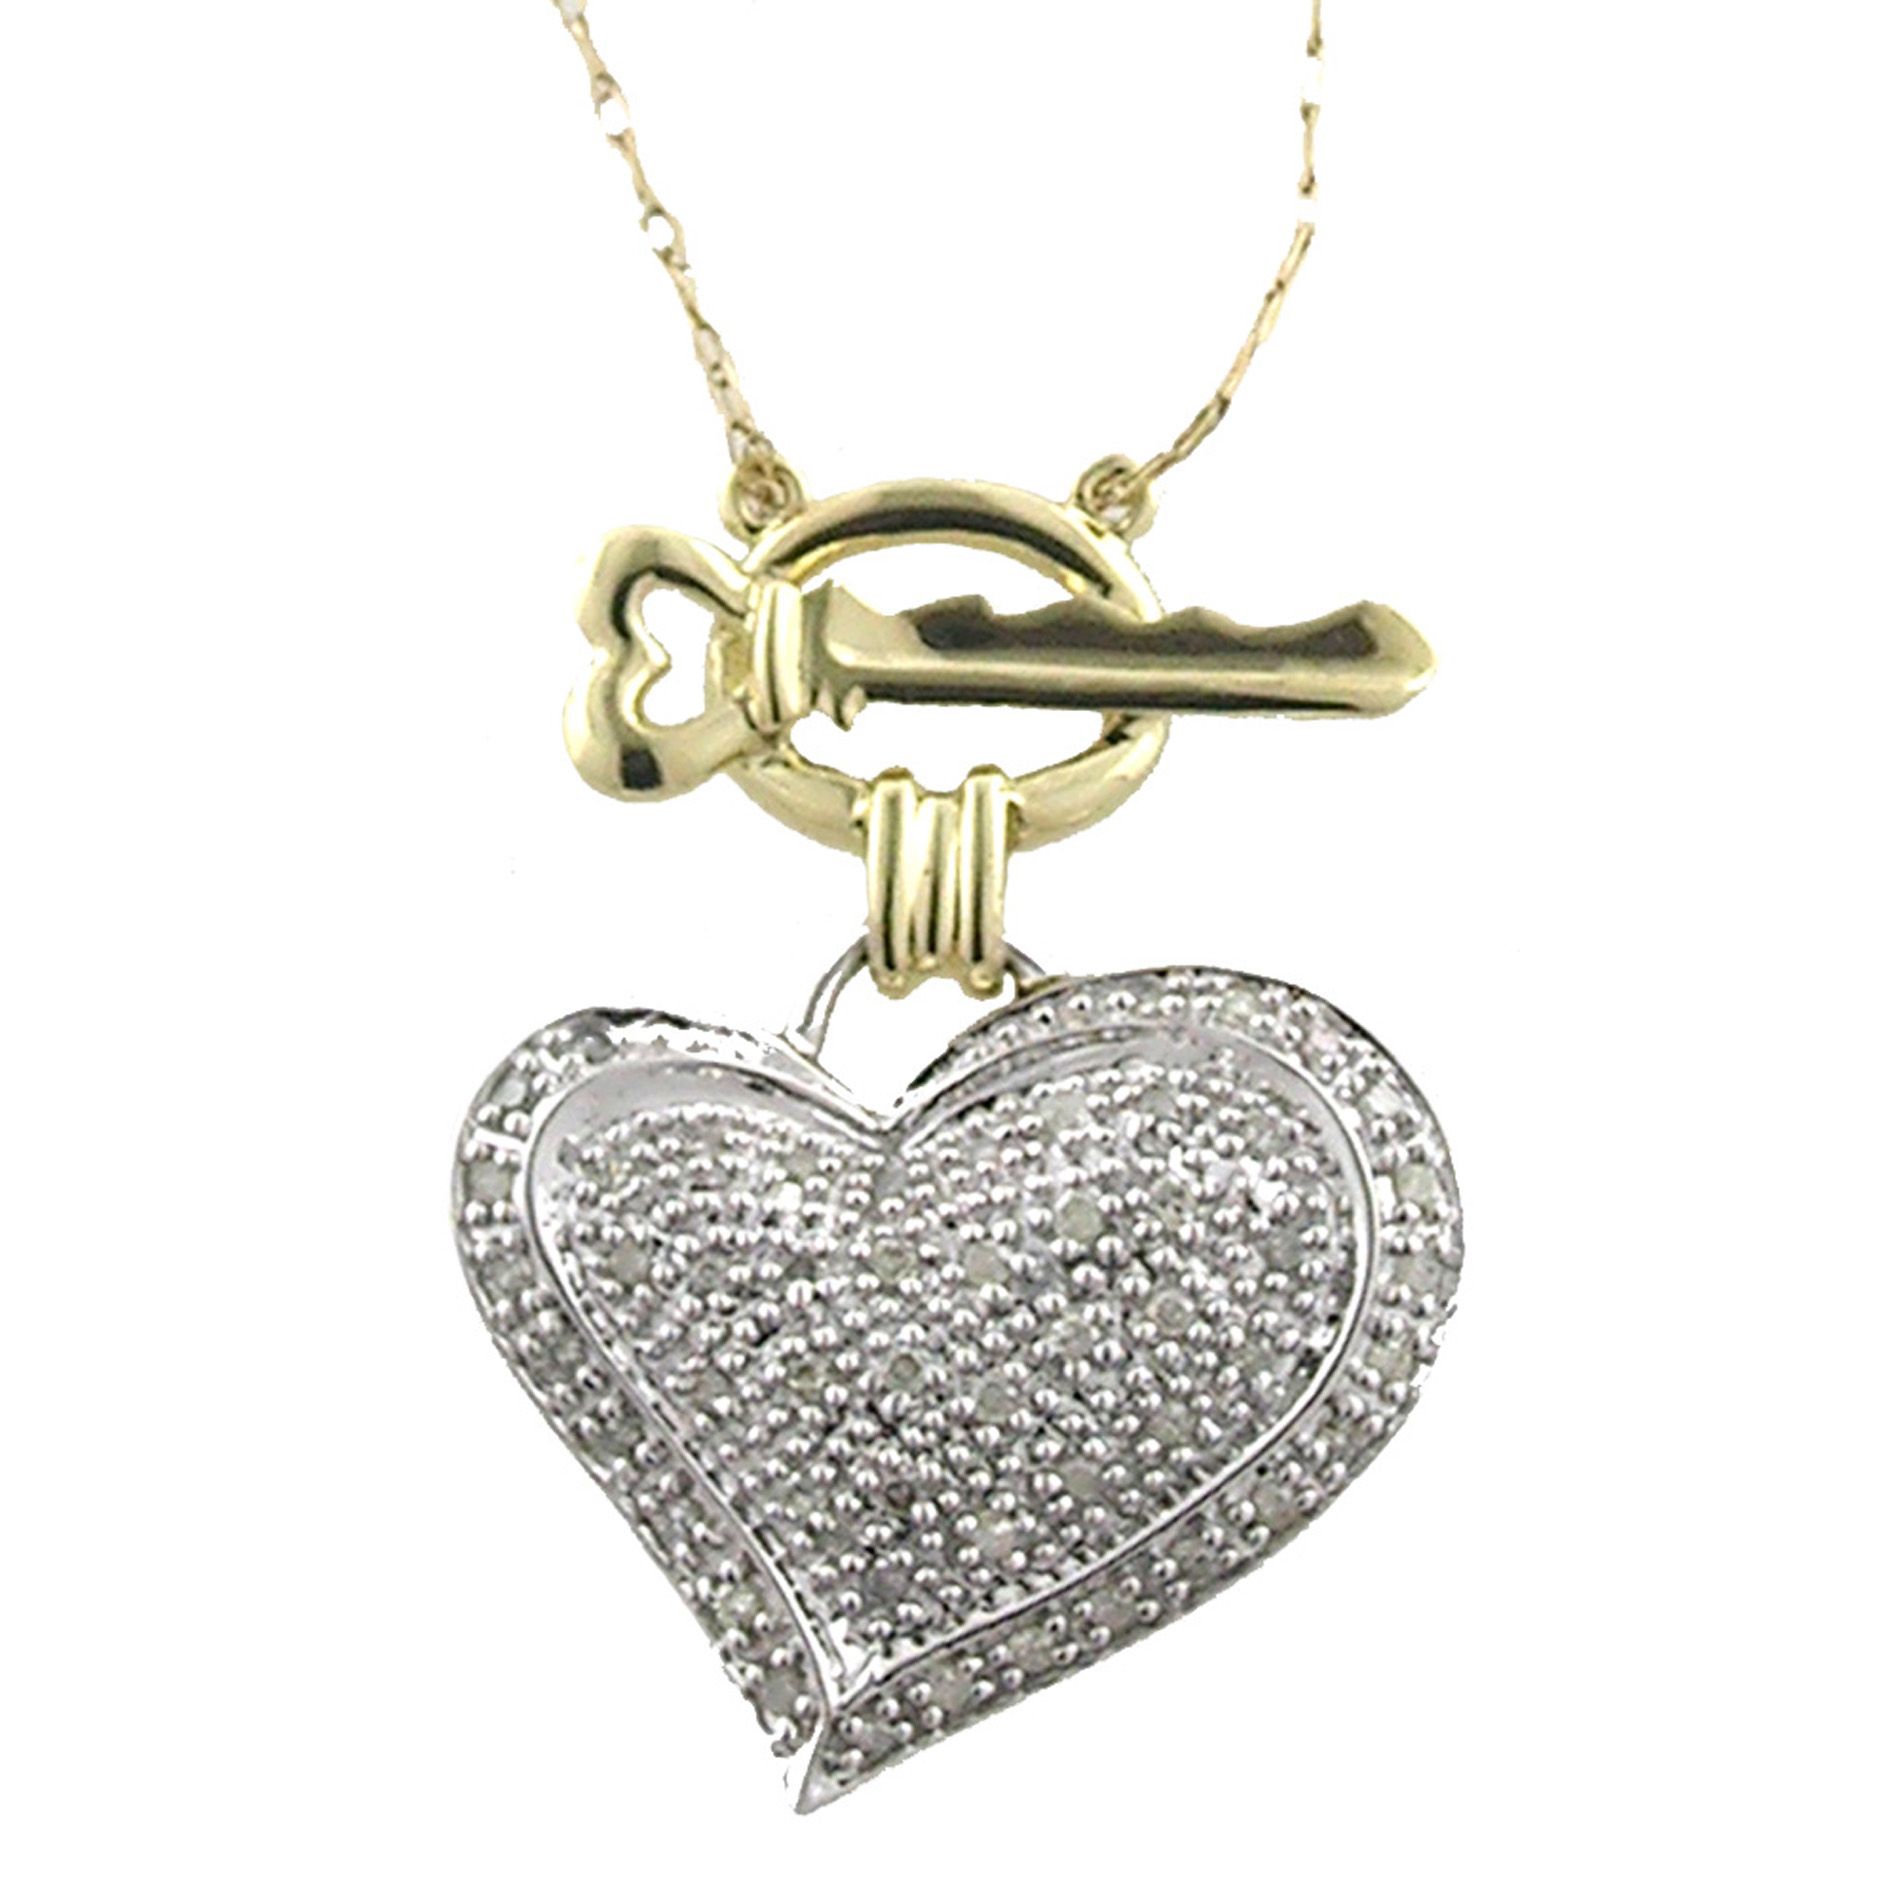 1/4 cttw Diamond Heart/Key Pendant. 10k White and Yellow Gold